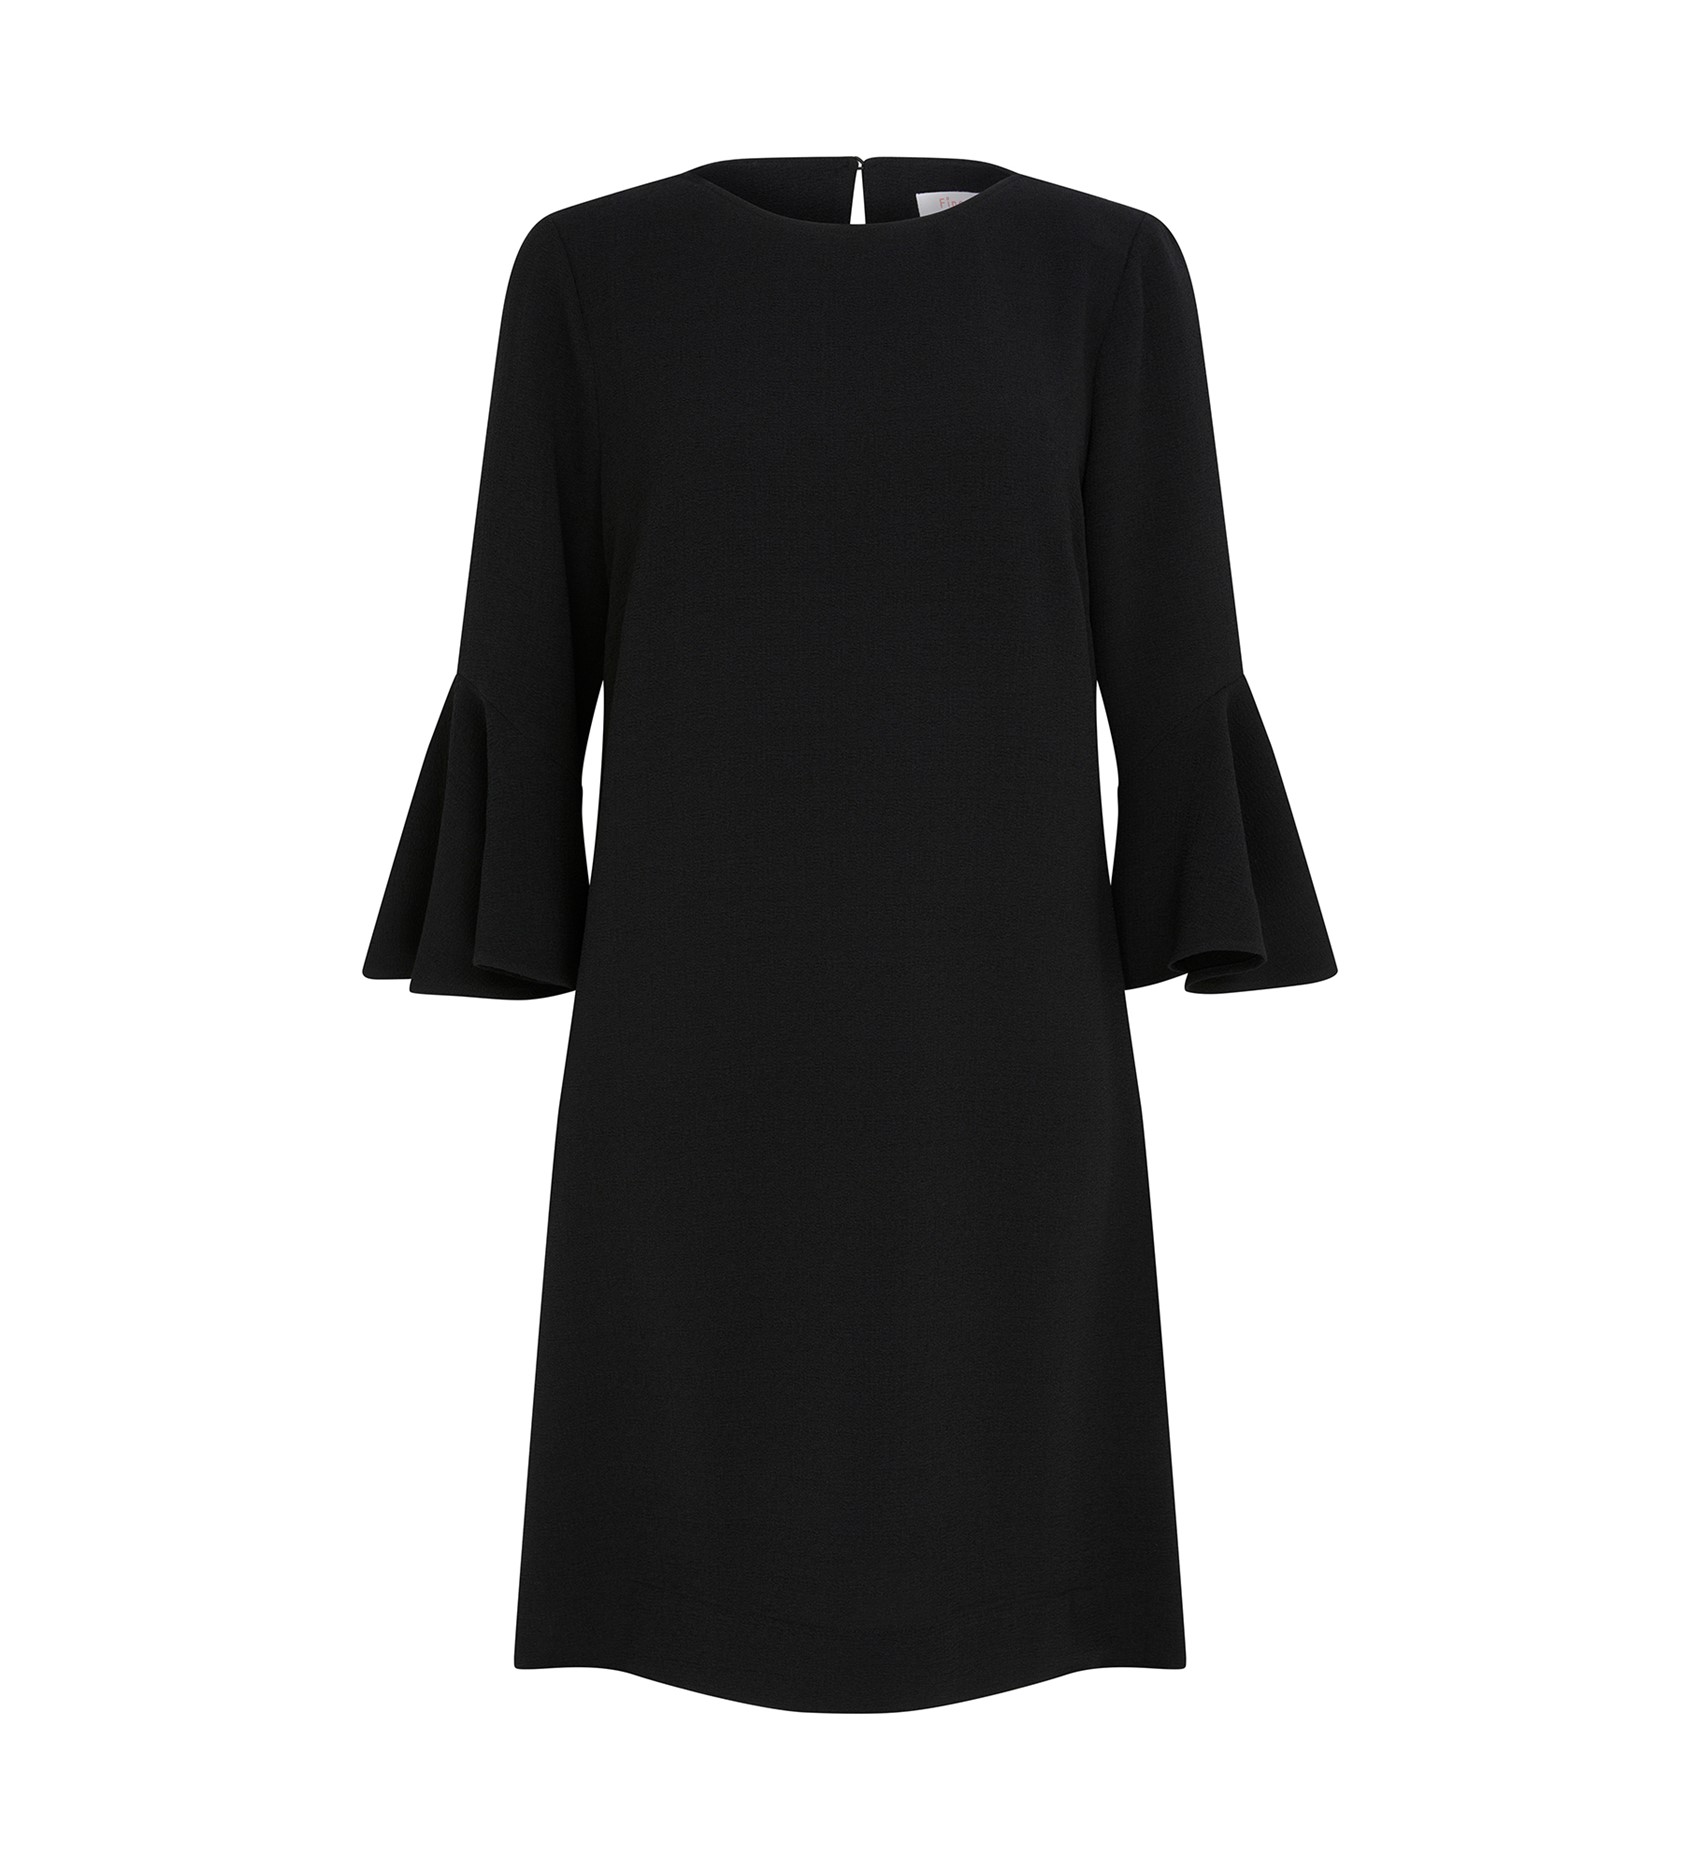 Izzy Black Crepe Midi Dress | Finery London